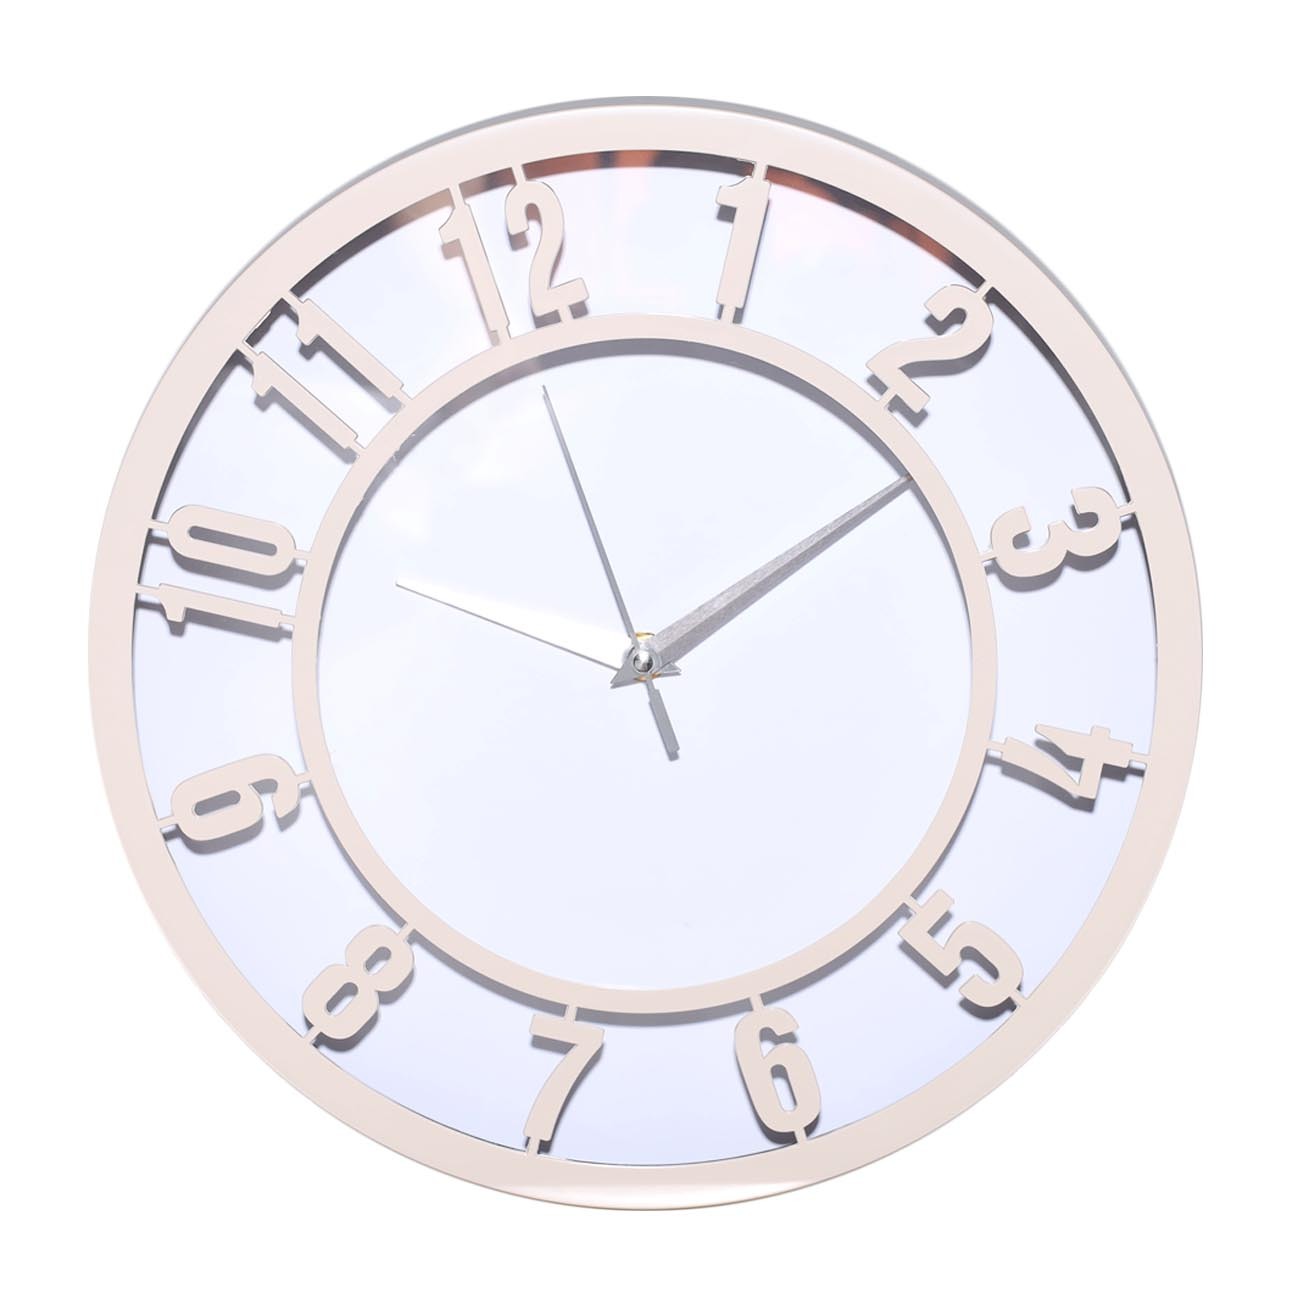 Часы настенные Kuchenland, 30 см, пластик/стекло, круглые, бежевый, Graphic